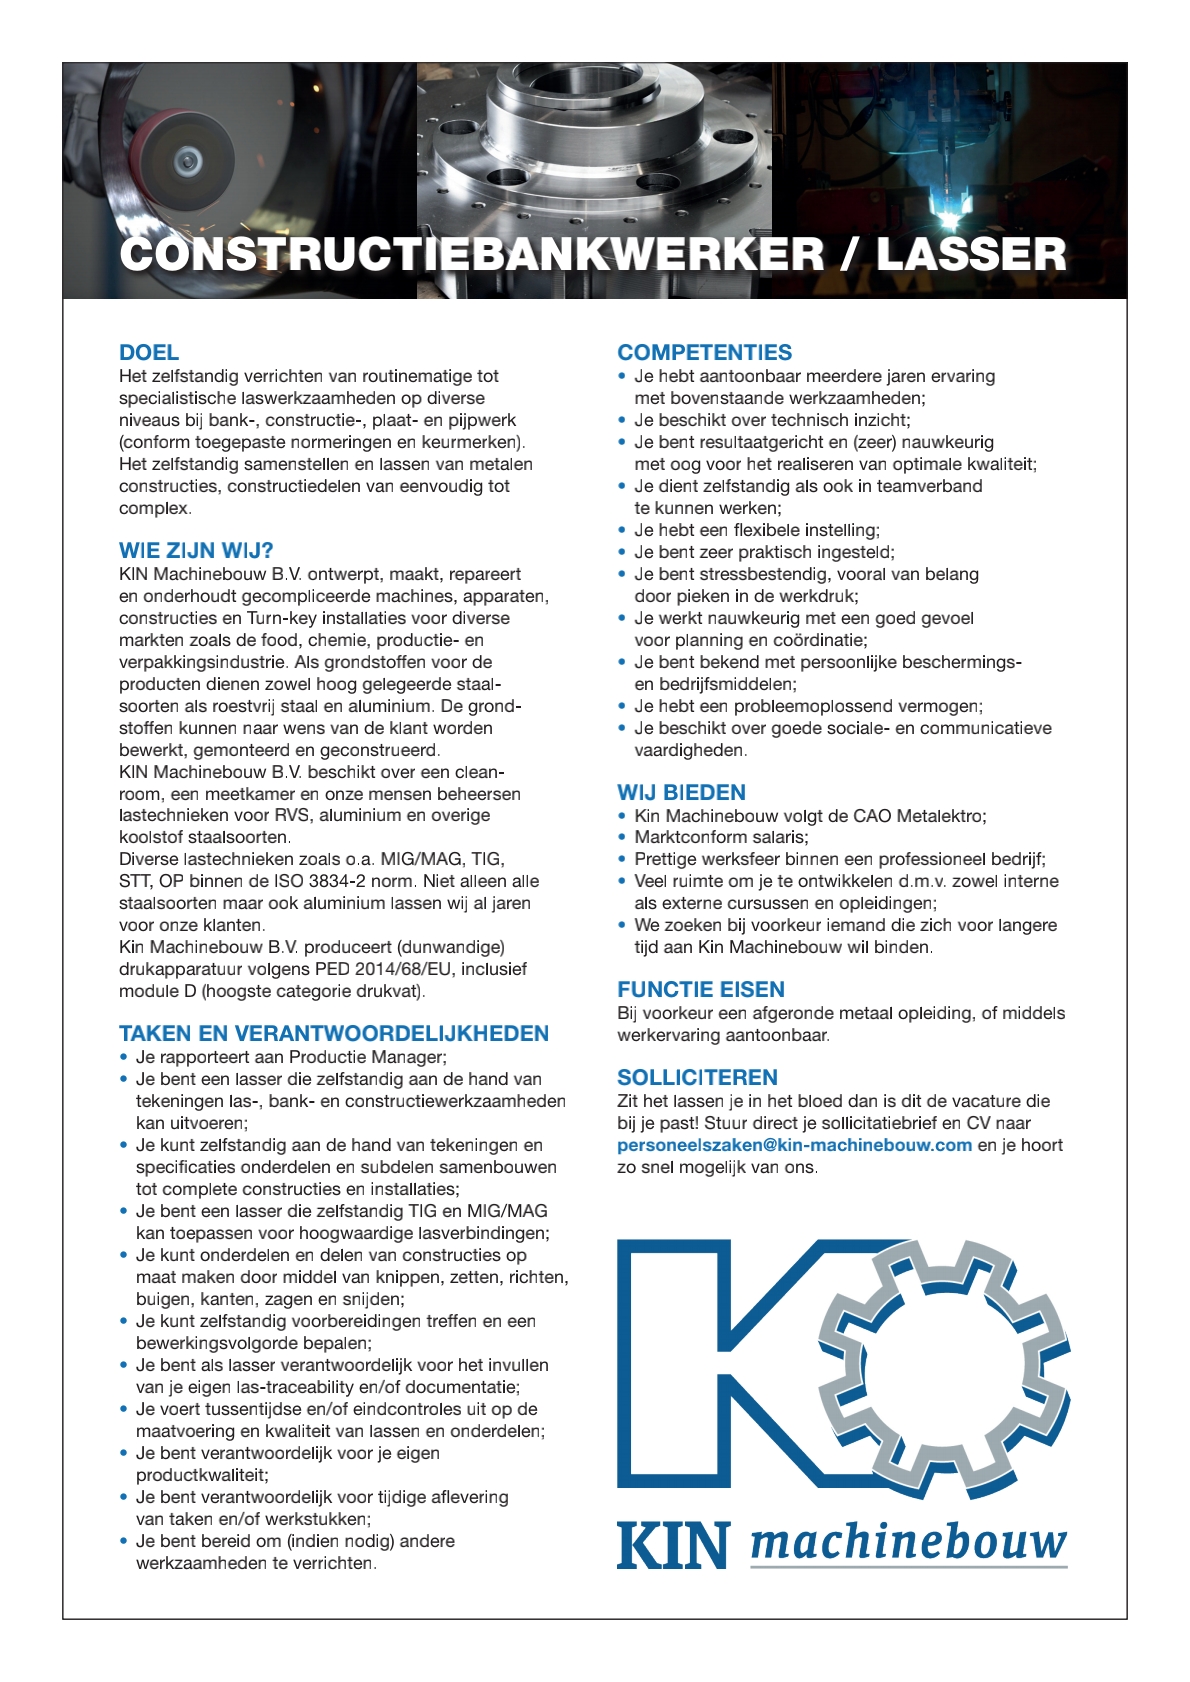 Constructiebankwerker - Lasser